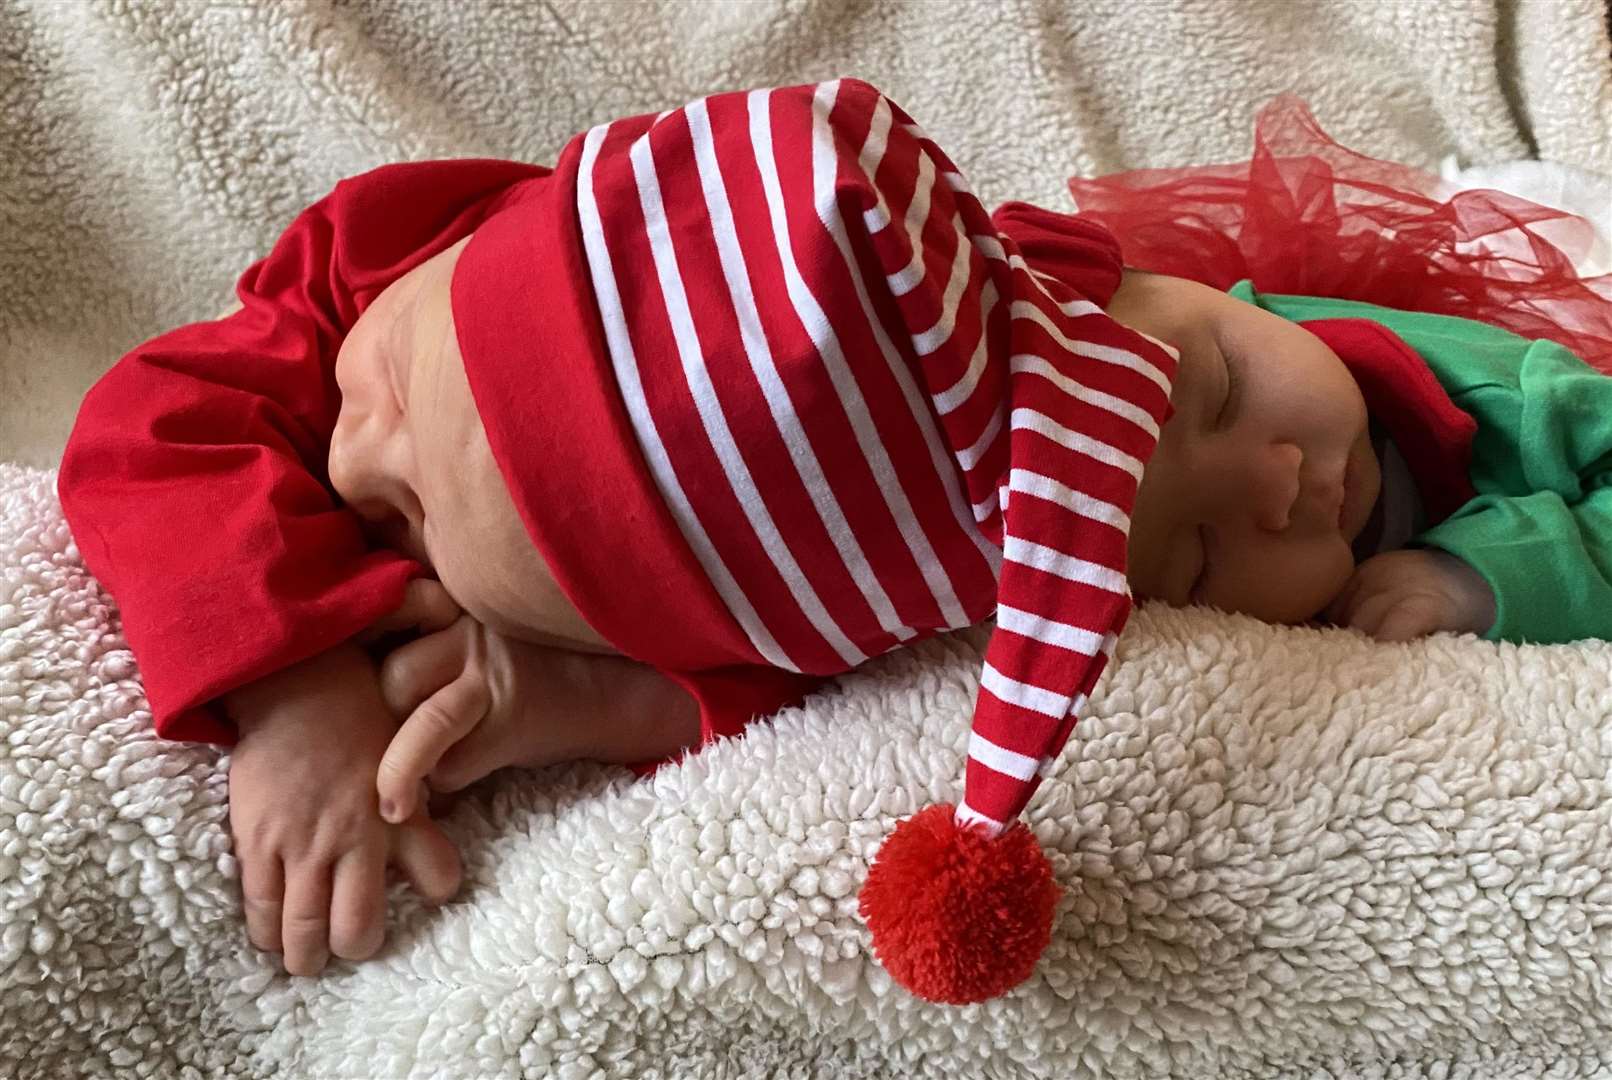 Finn John MacNeil, 7 weeks old and Robyn Brooke Smith, 12 weeks old.